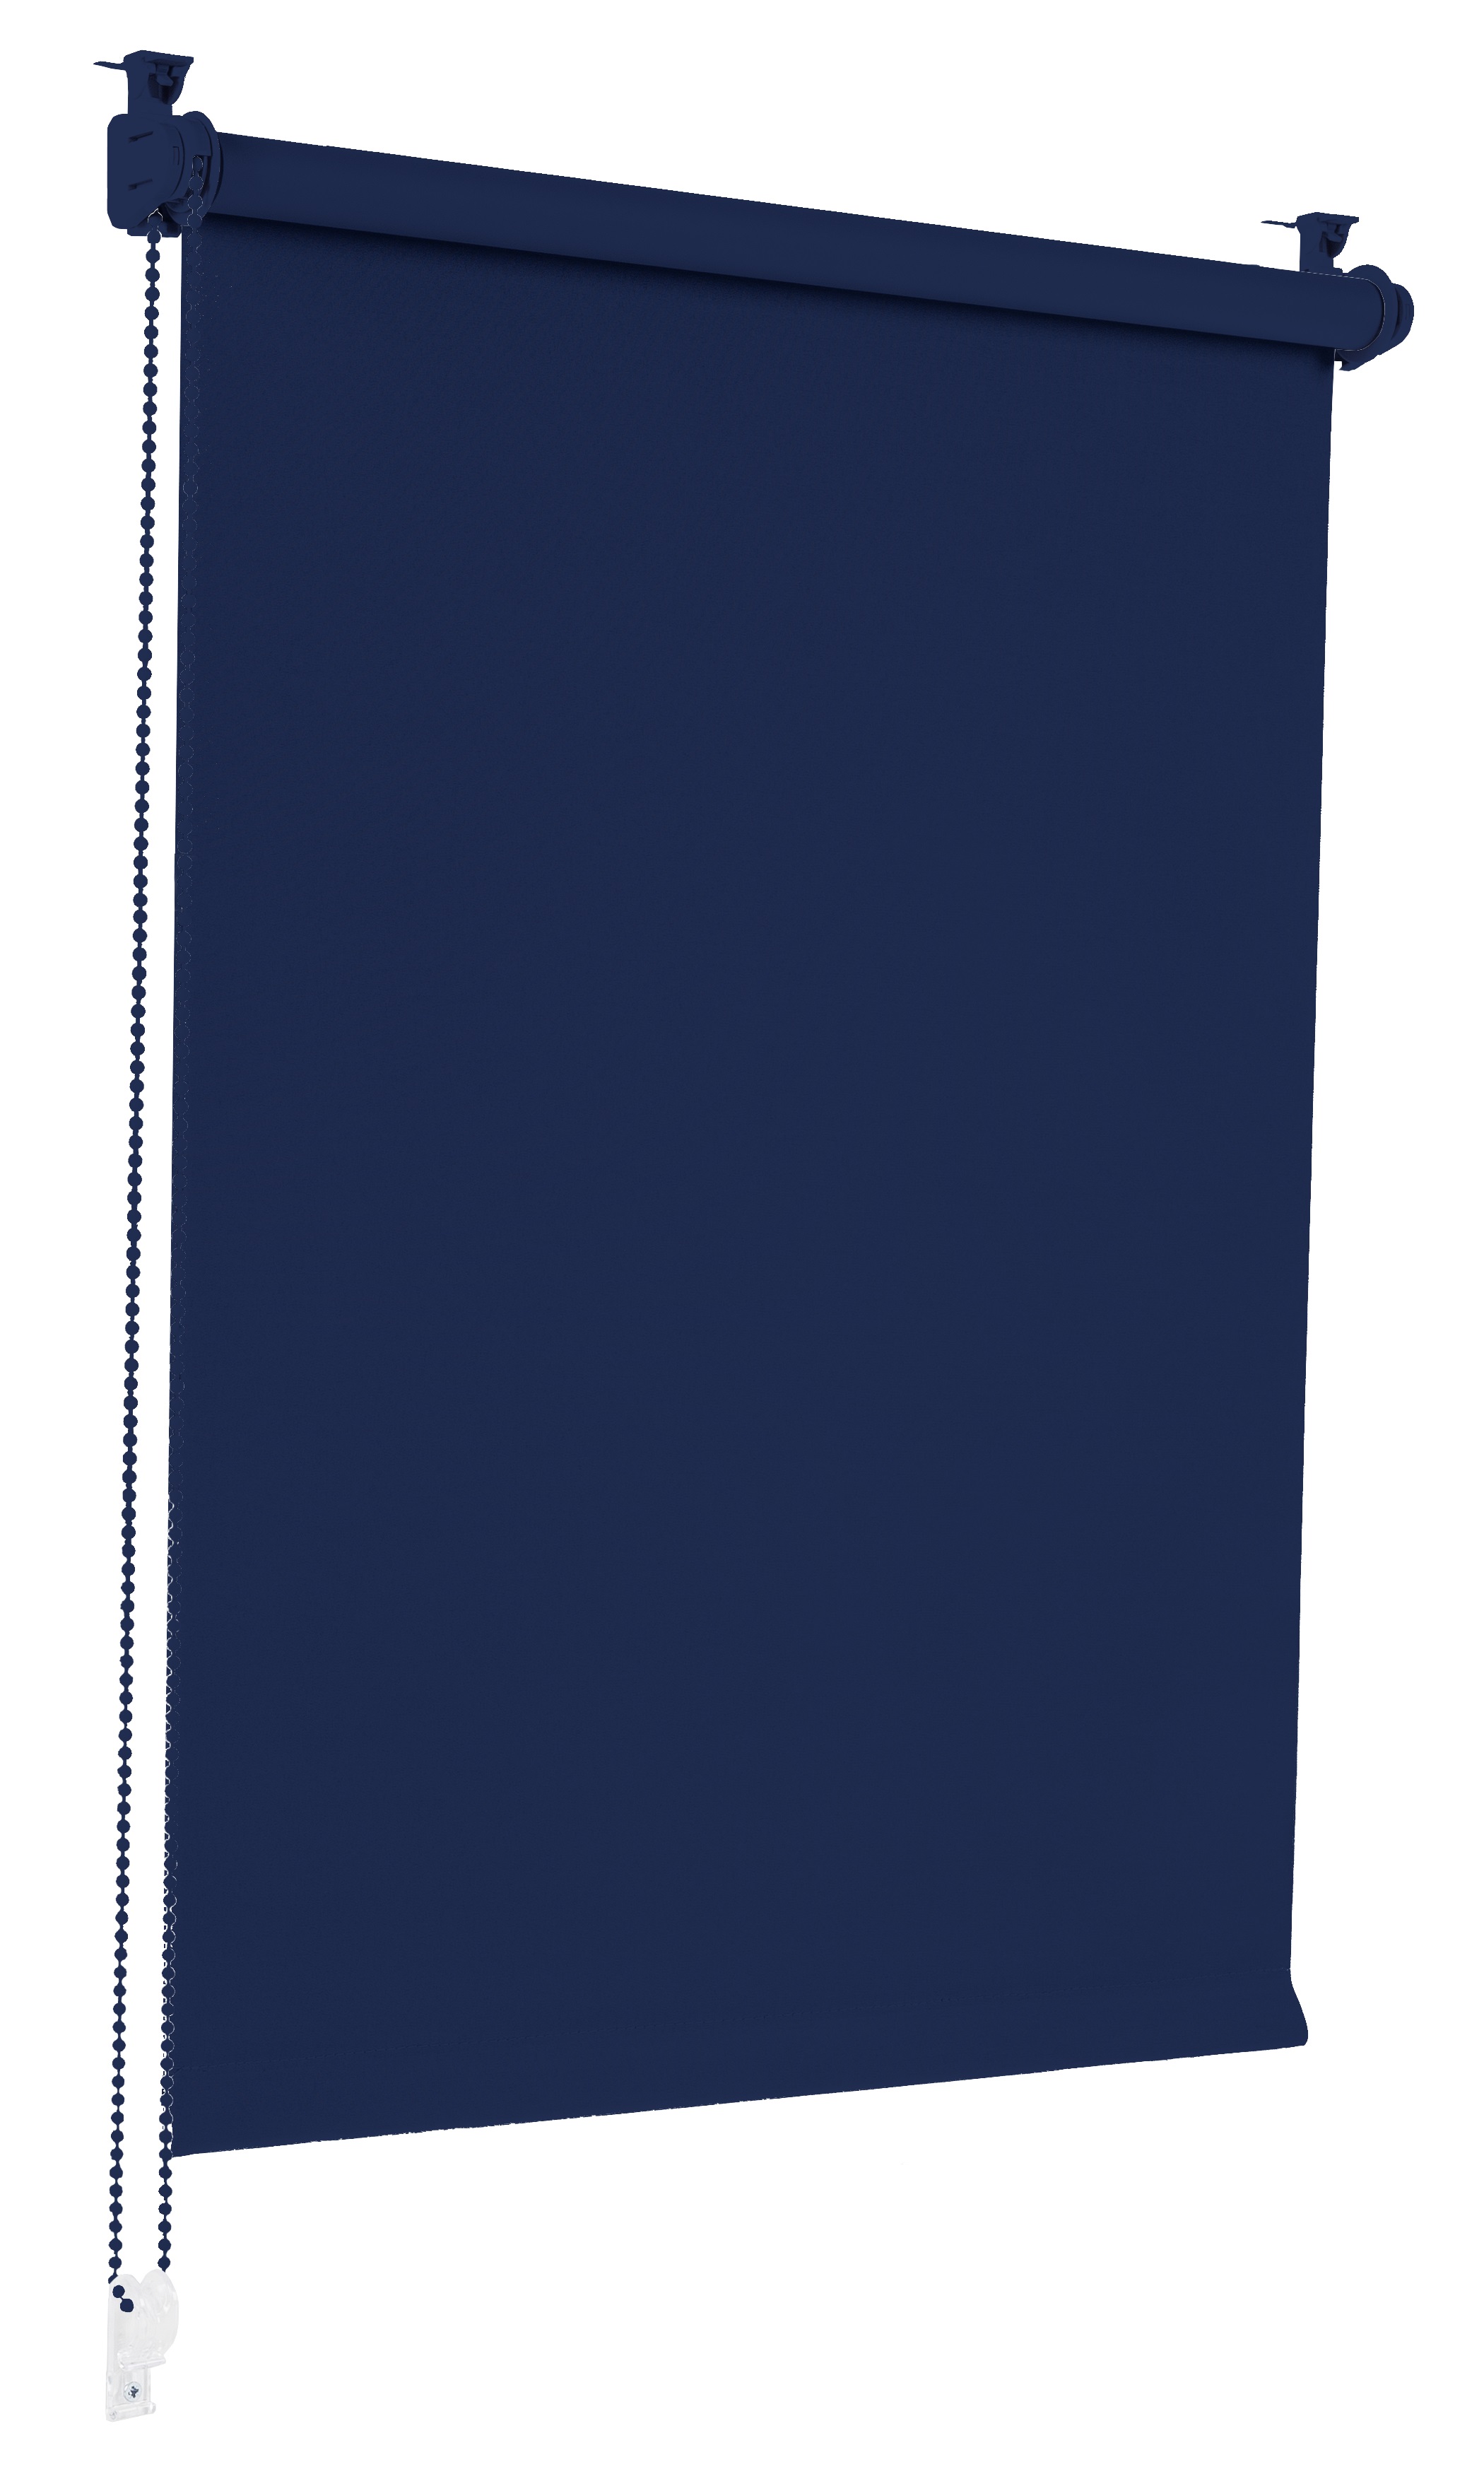 SONELLO Verdunkelungsrollo dunkelblau 65cm x 210cm